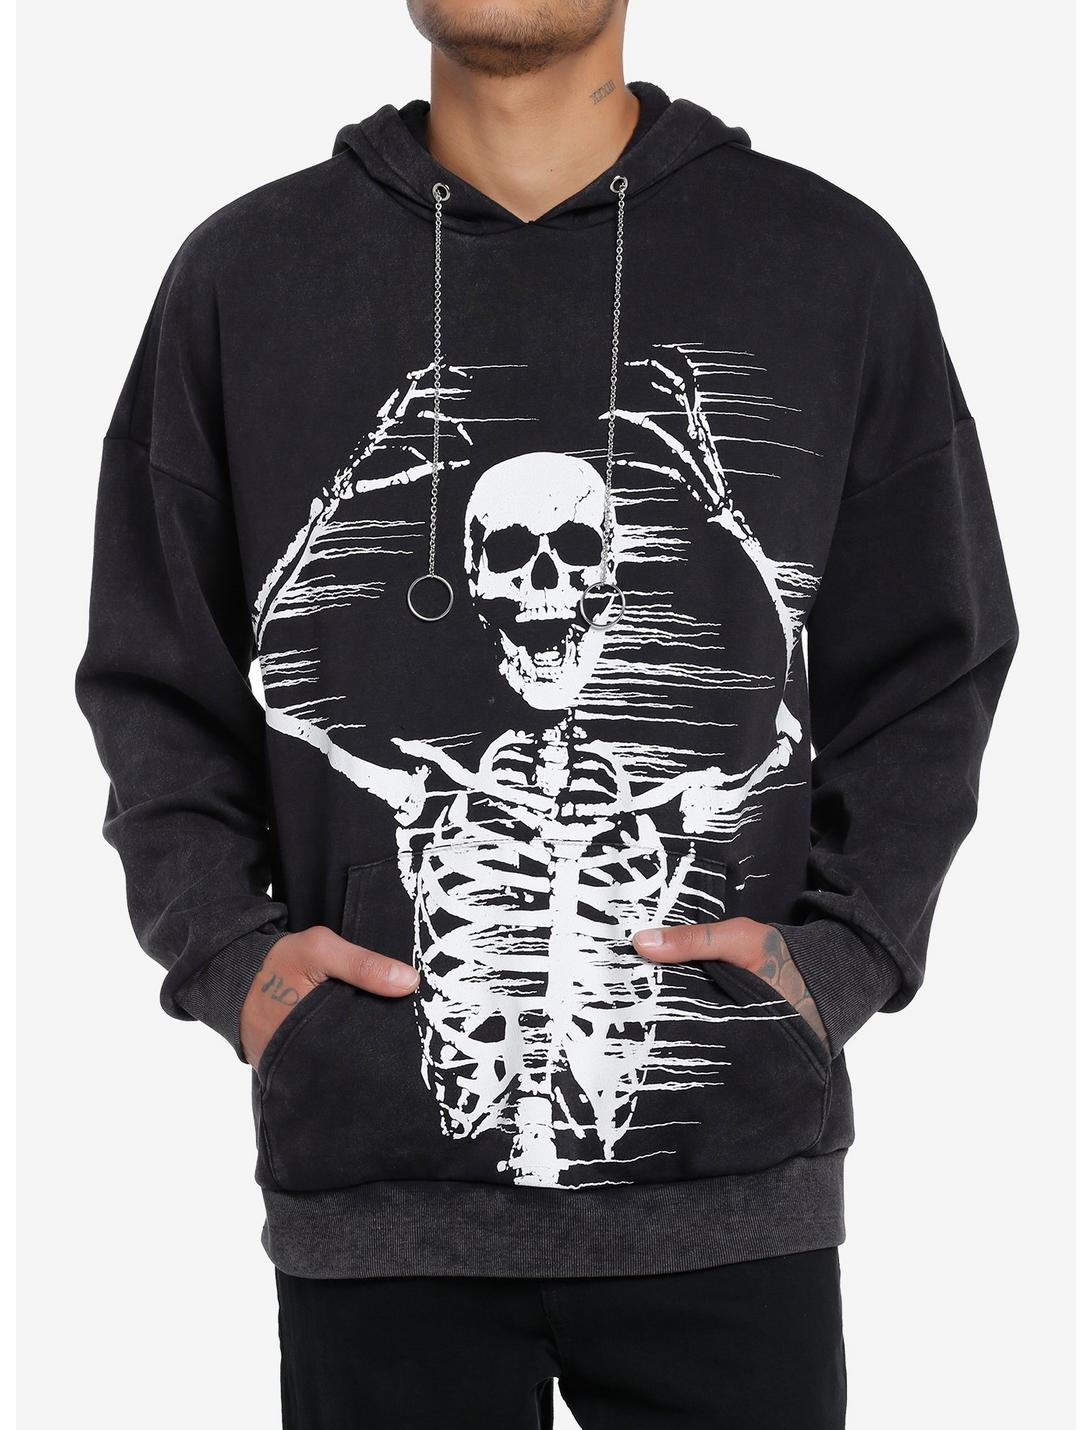 Pirates of the Caribbean Hoodie Sweatshirt - Pirate Skeleton Front